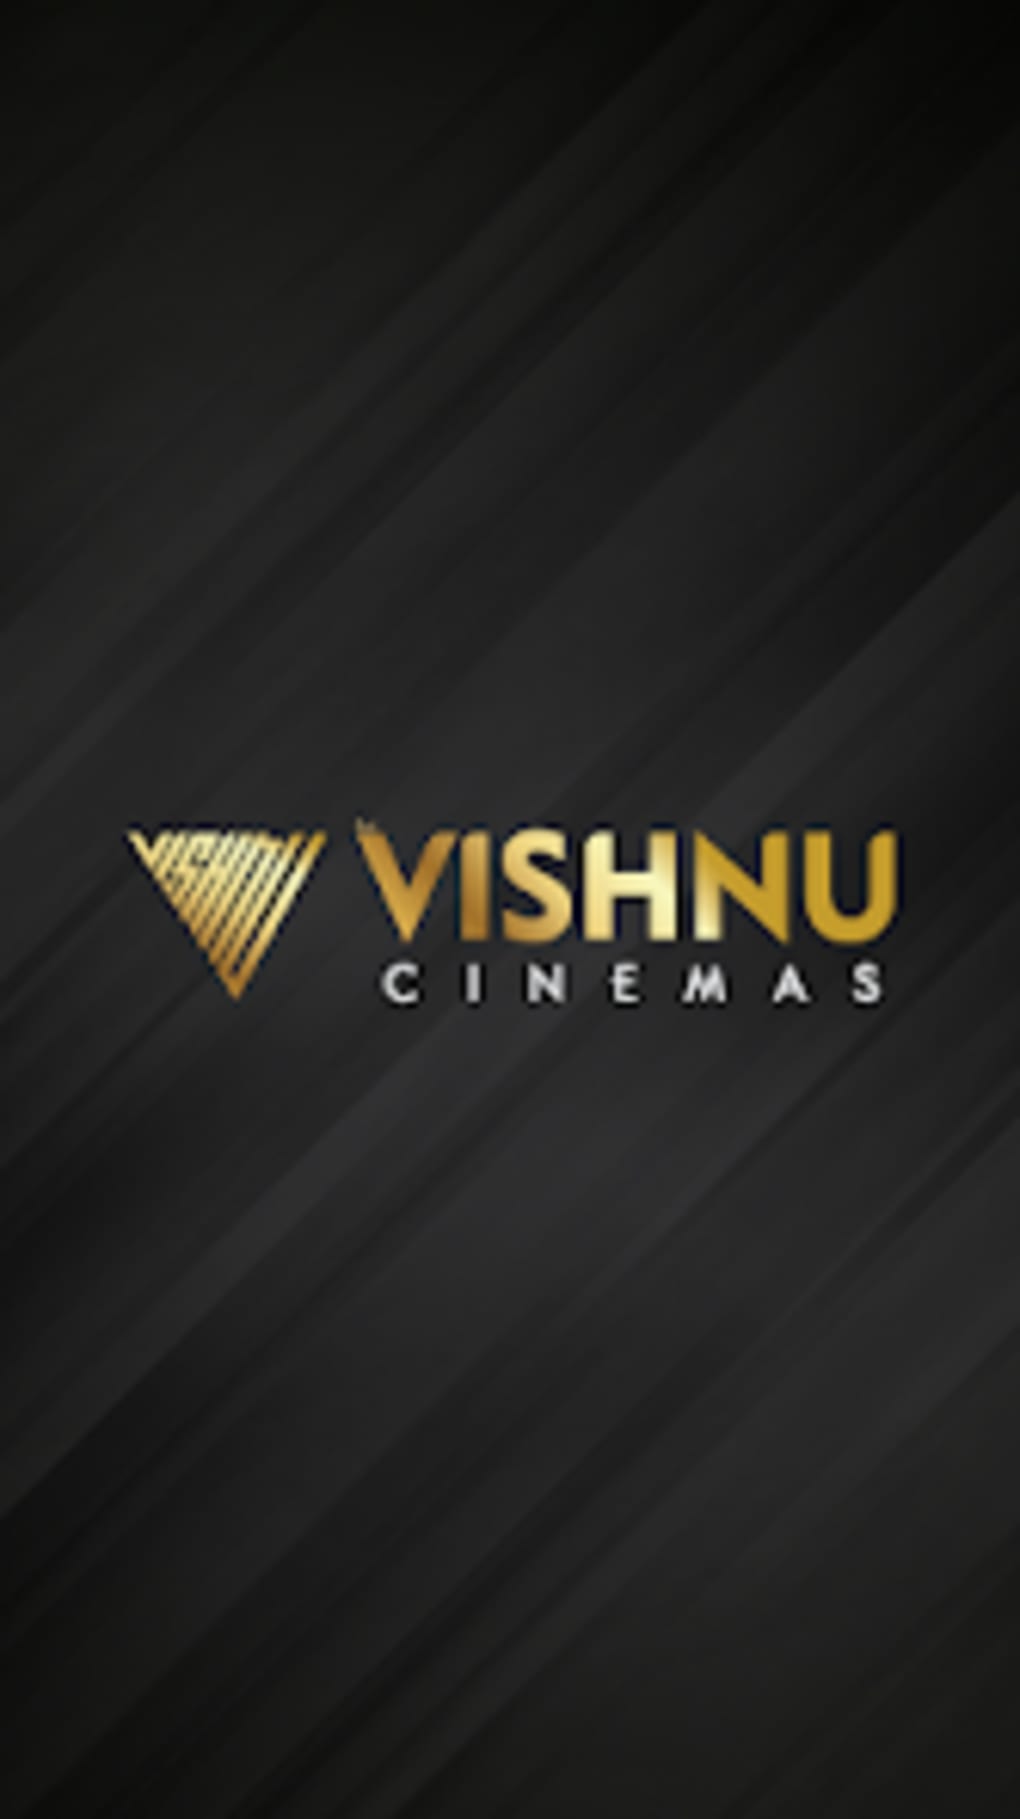 Sri Vishnu cinemas - Vellore for Android - Download